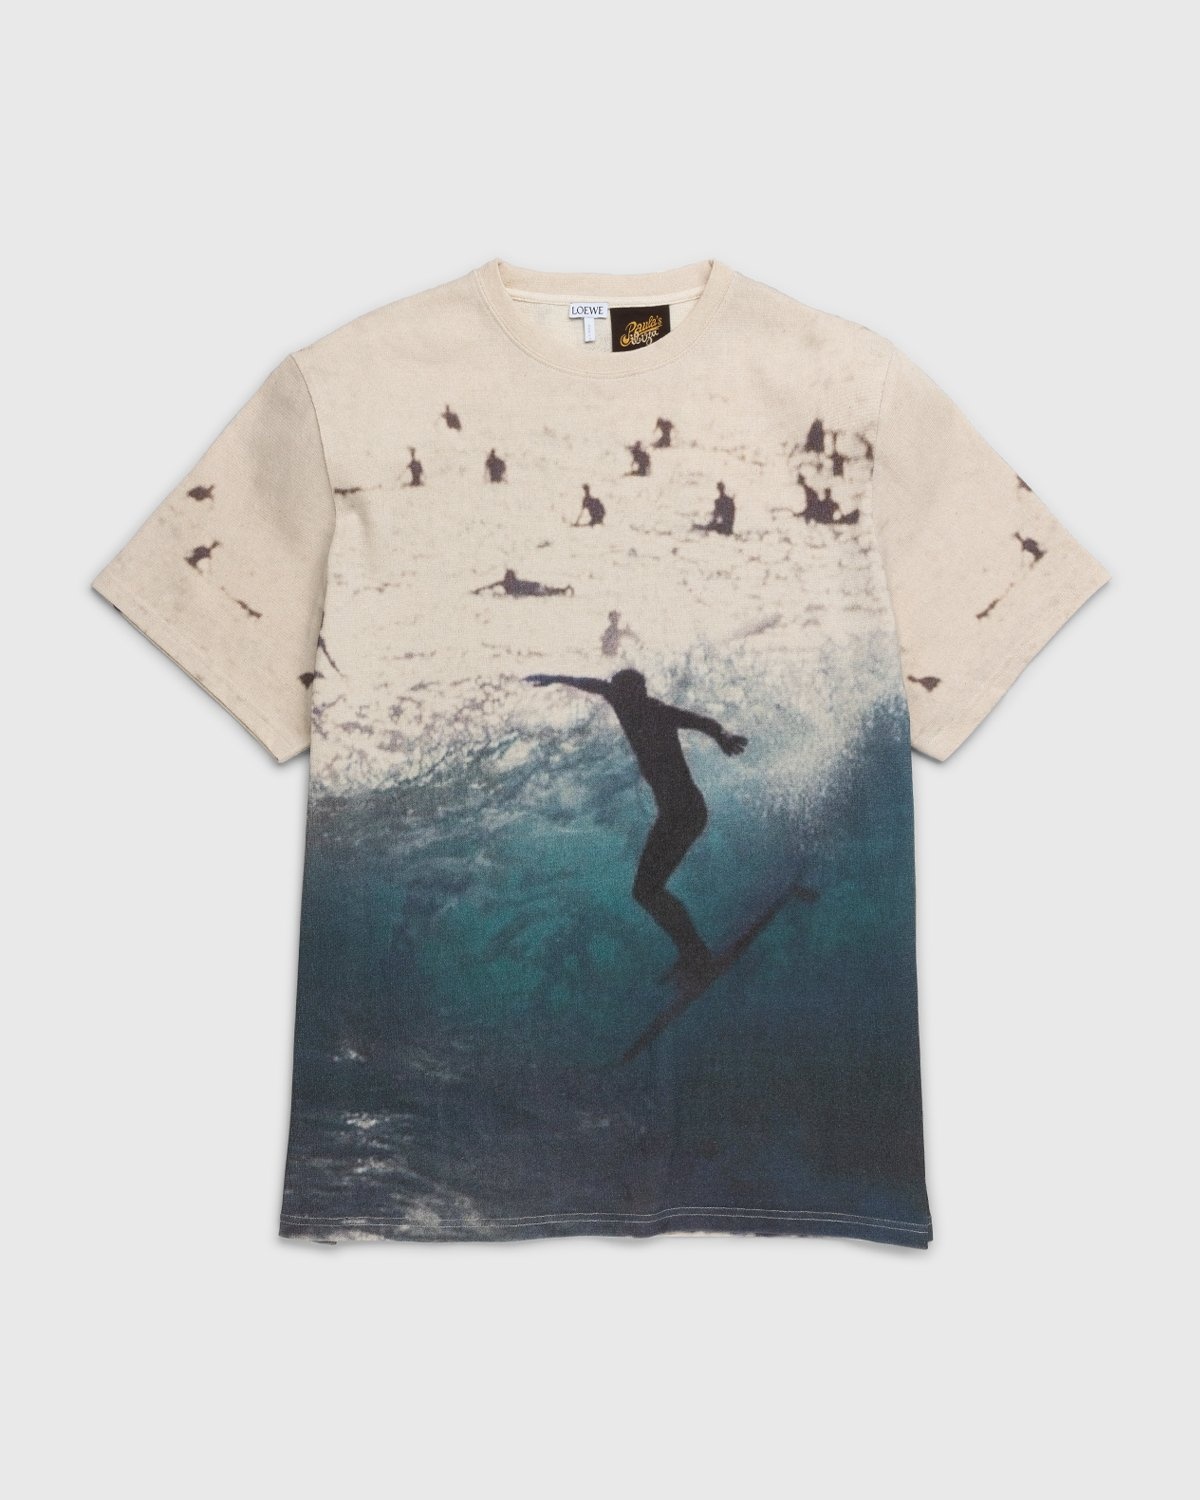 Loewe – Paula's Ibiza Surf Print T-Shirt Ecru/Navy Blue - Tops - Multi - Image 1